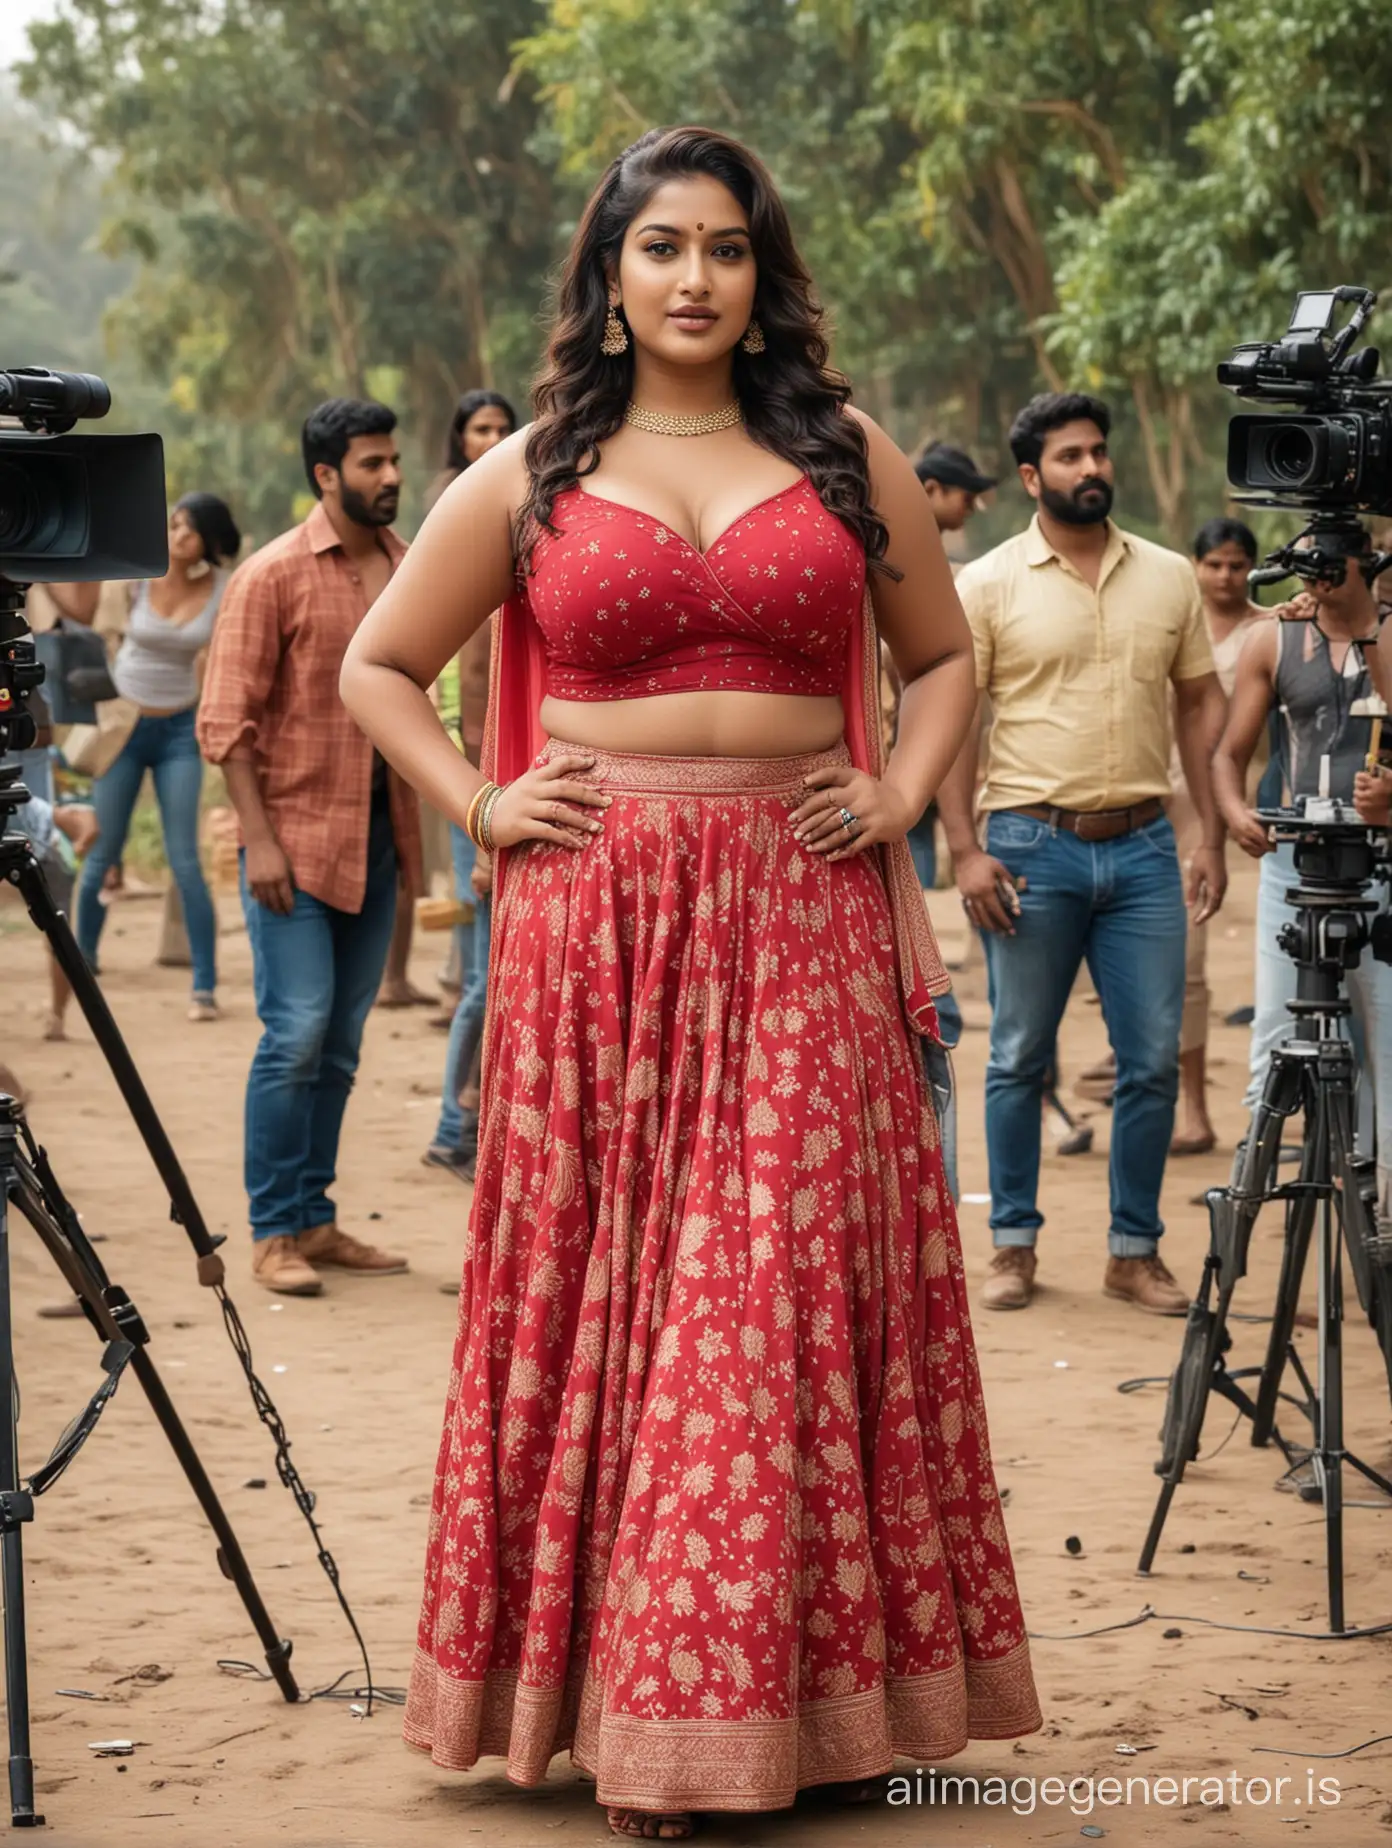 Indian-Plus-Size-Women-on-Movie-Set-Glamorous-Scene-with-Crew-Members